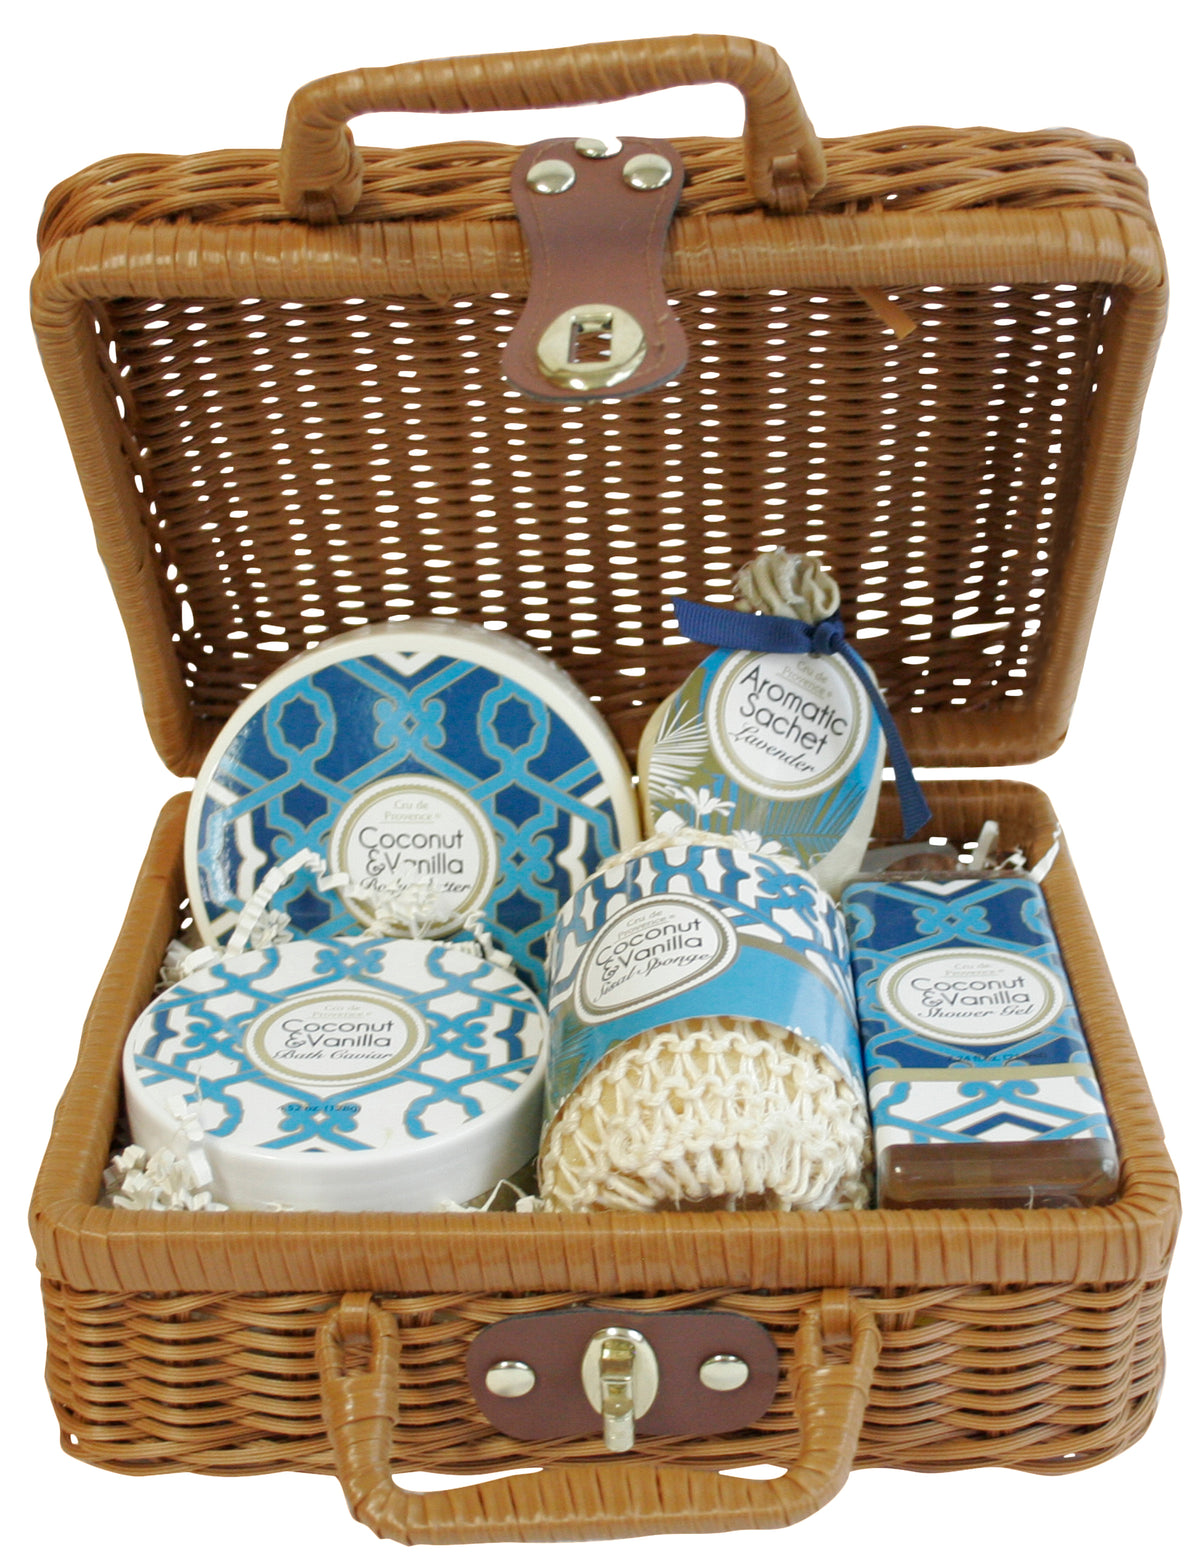 Food Safe Washable Wicker Picnic Basket Suitcase